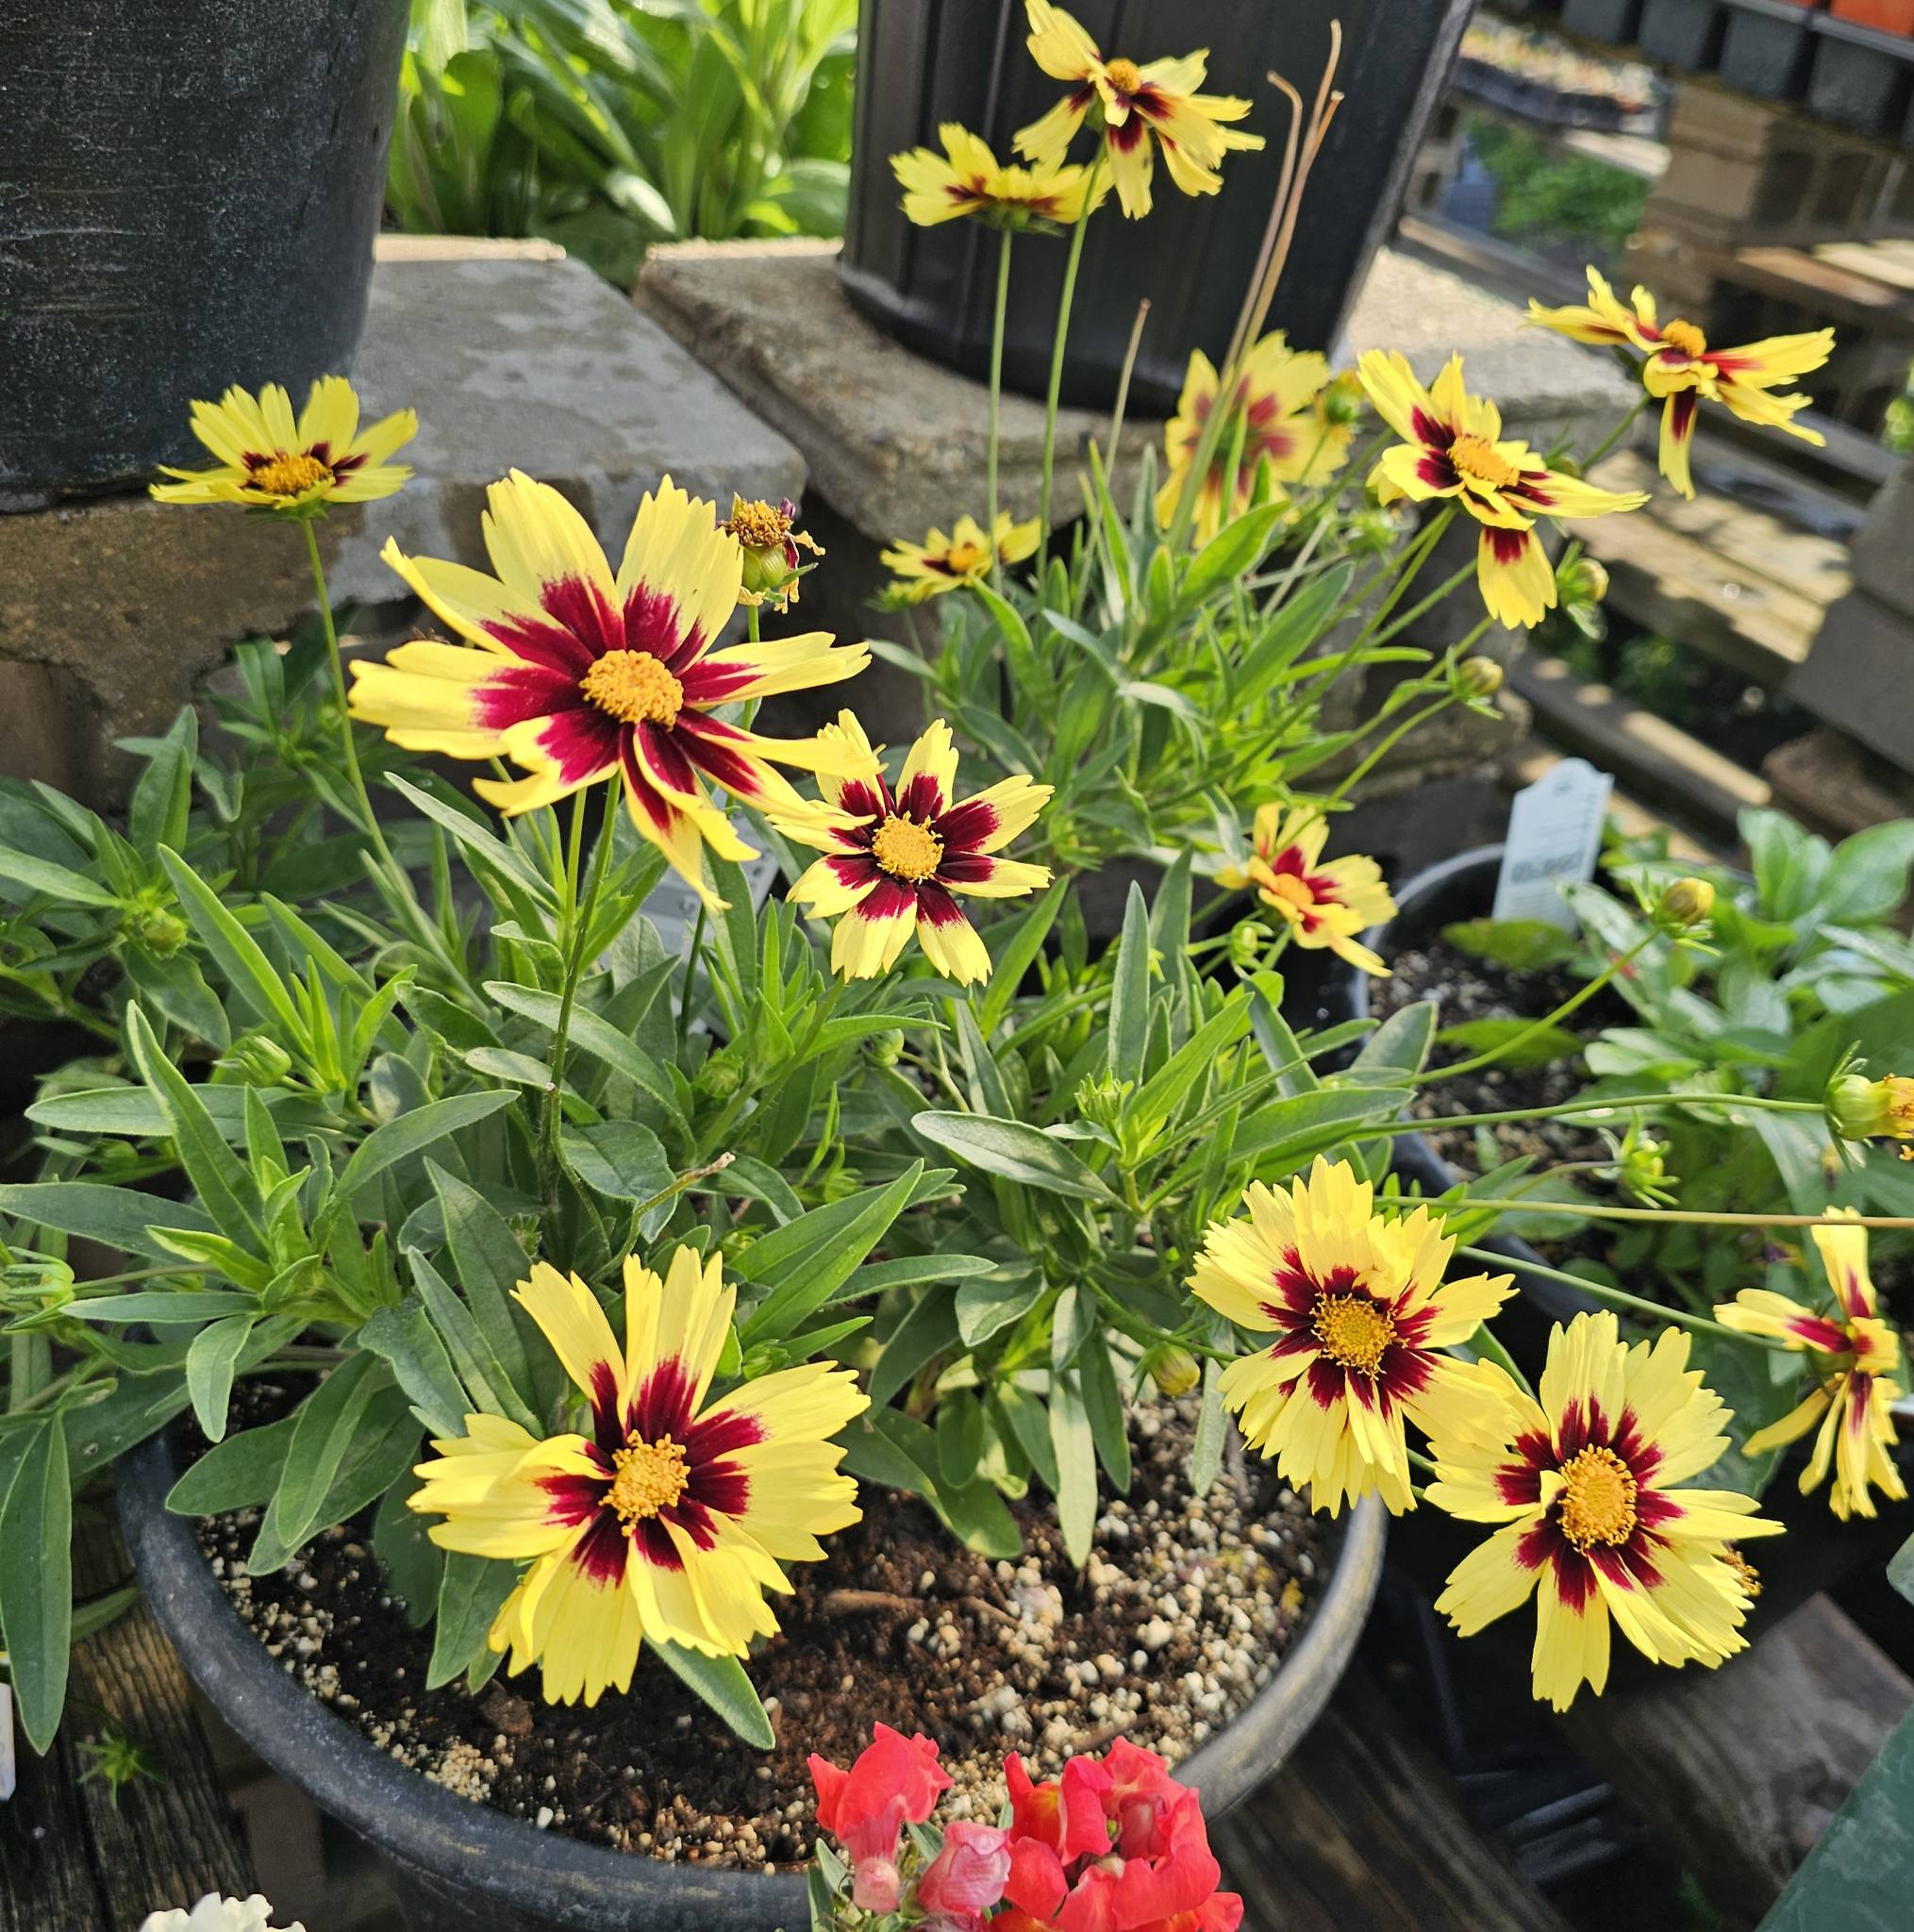 Longest blooming perennials for pots